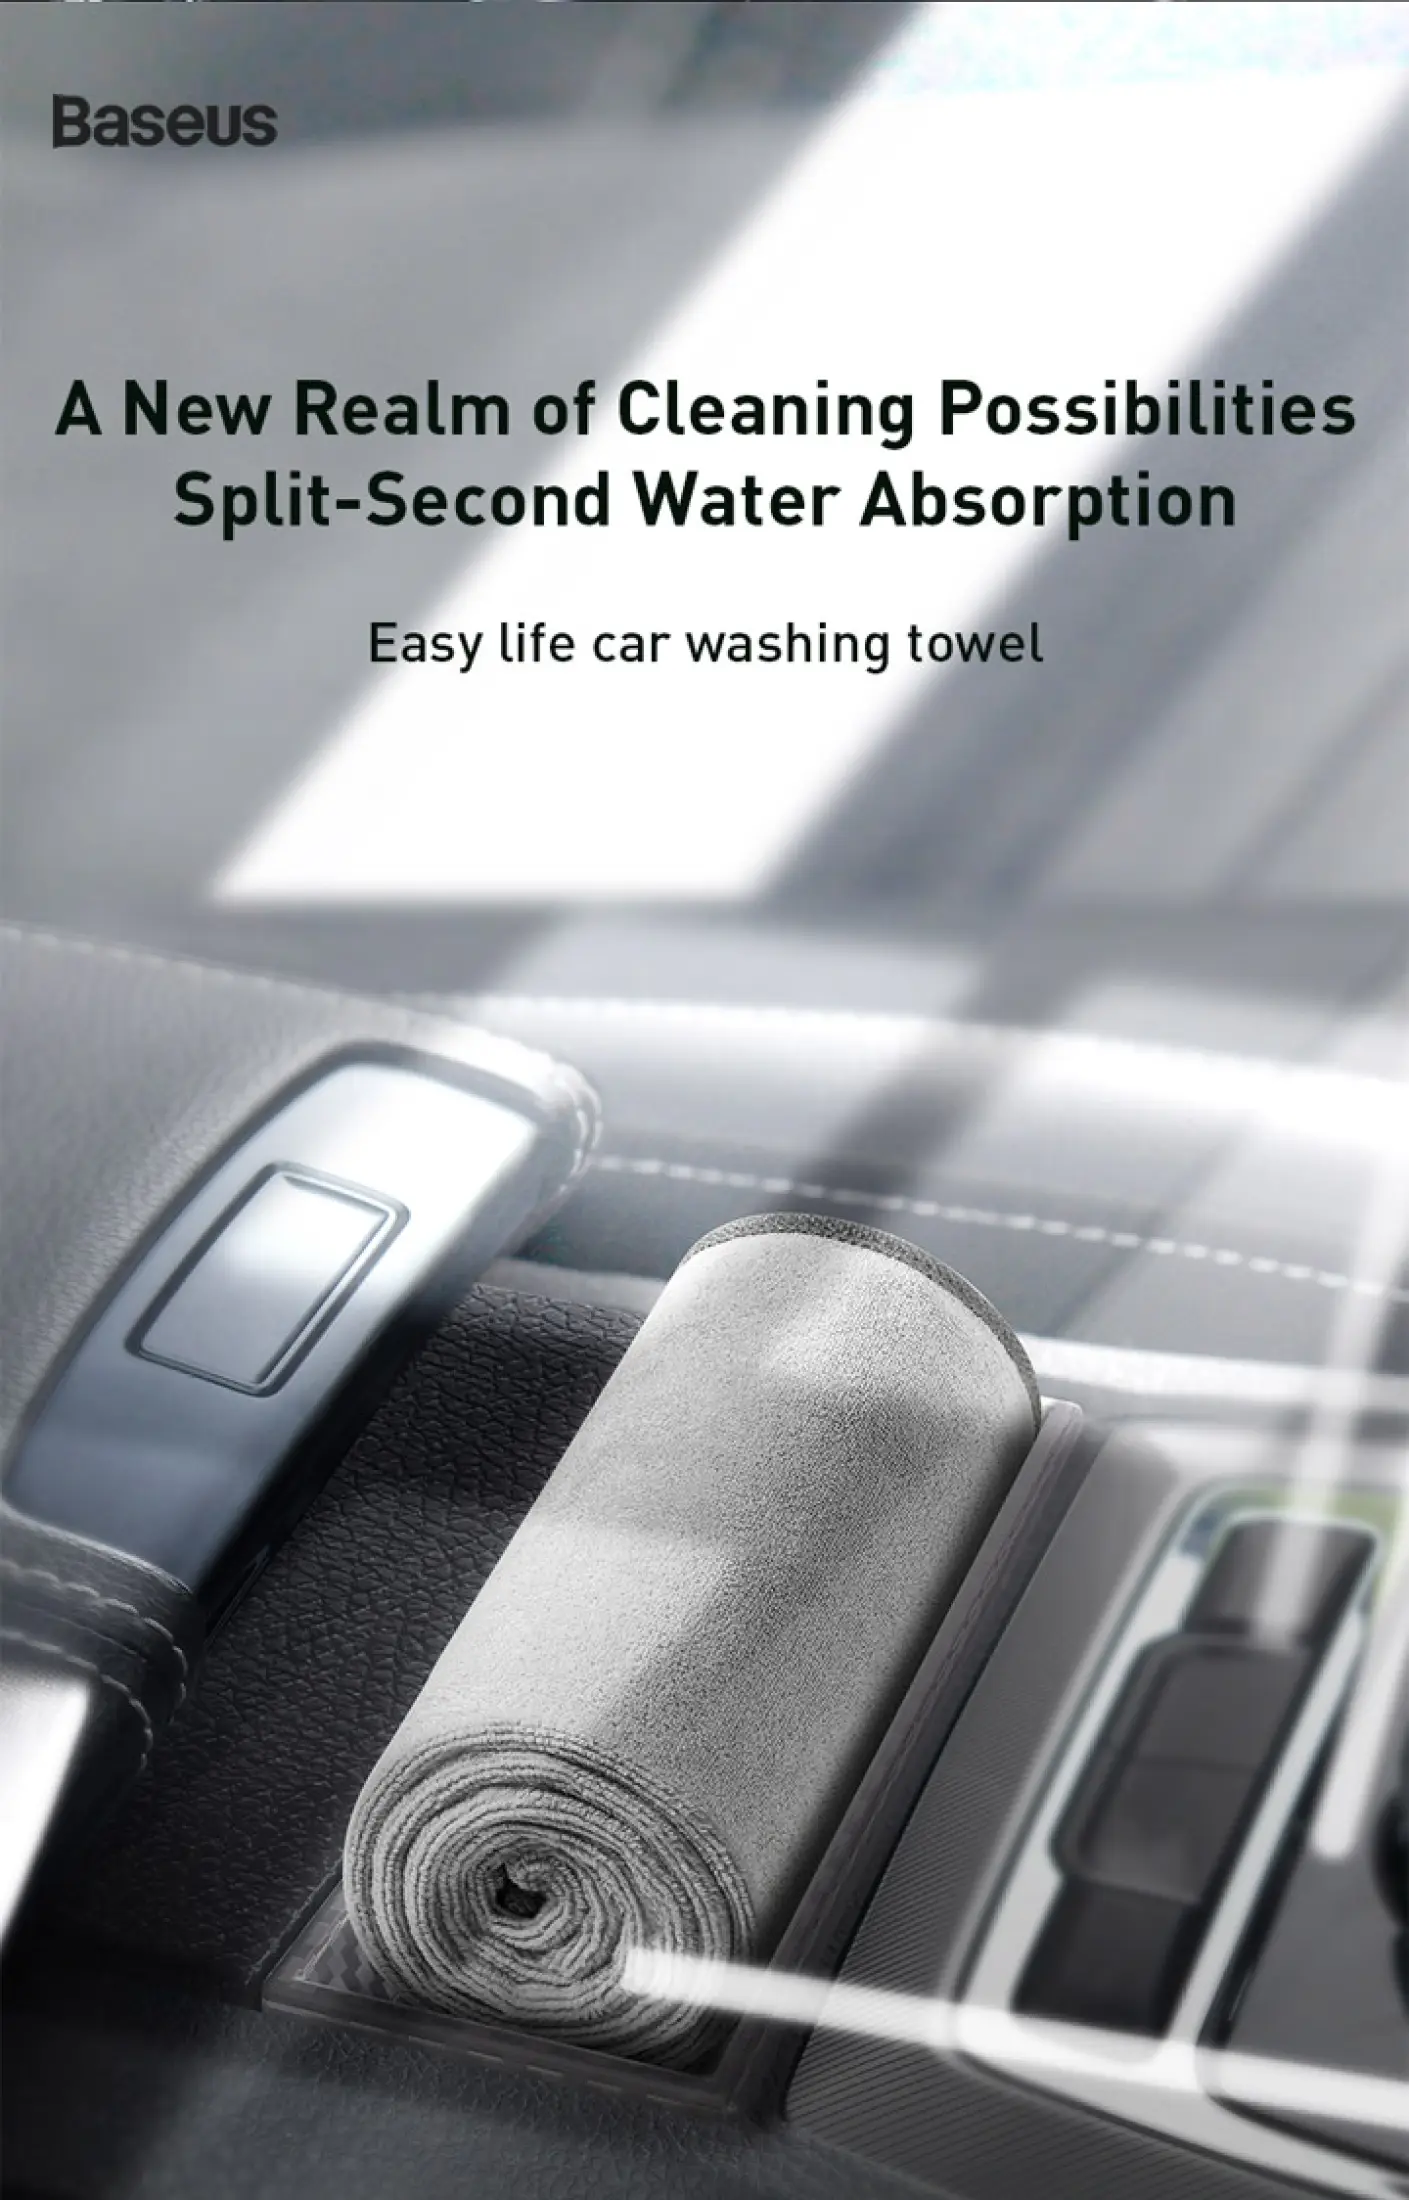 Baseus Microfiber Car Wash Towel Dry Auto Cleaning Kit buy online best price in pakistan